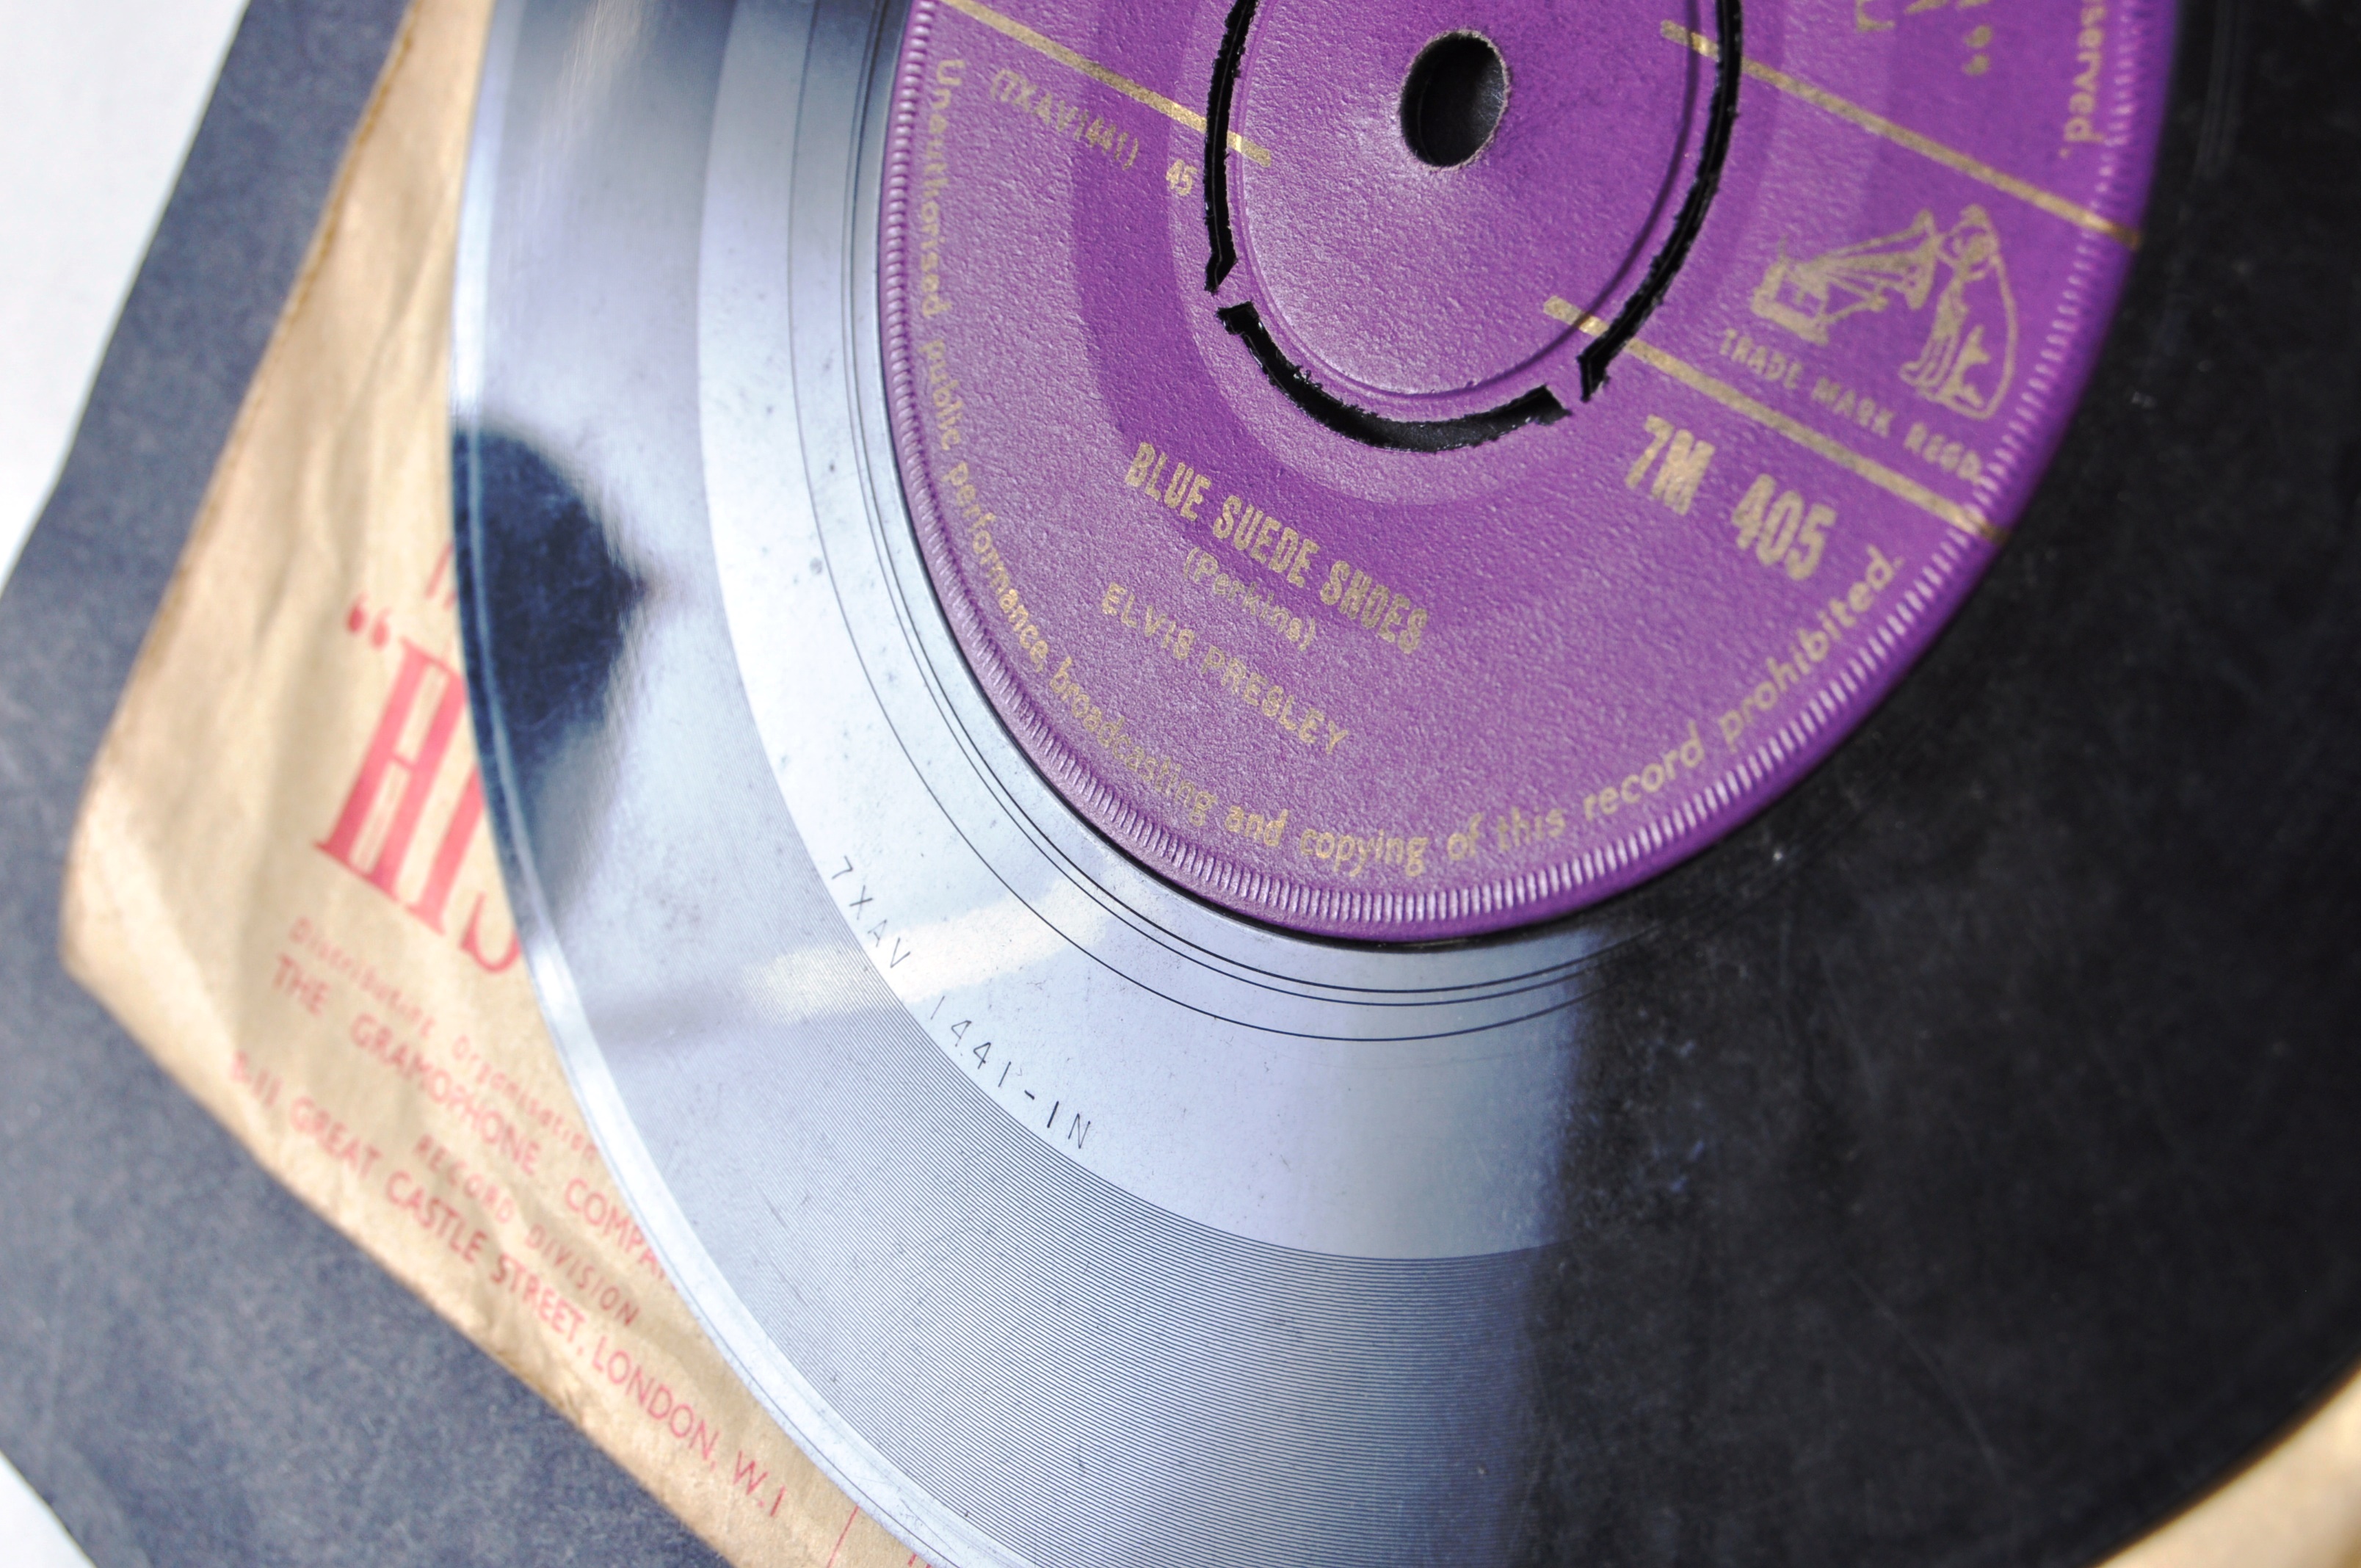 ELVIS PRESLEY - BLUE SUEDE SHOES HMV PURPLE LABEL 45 SINGLE - Image 4 of 4